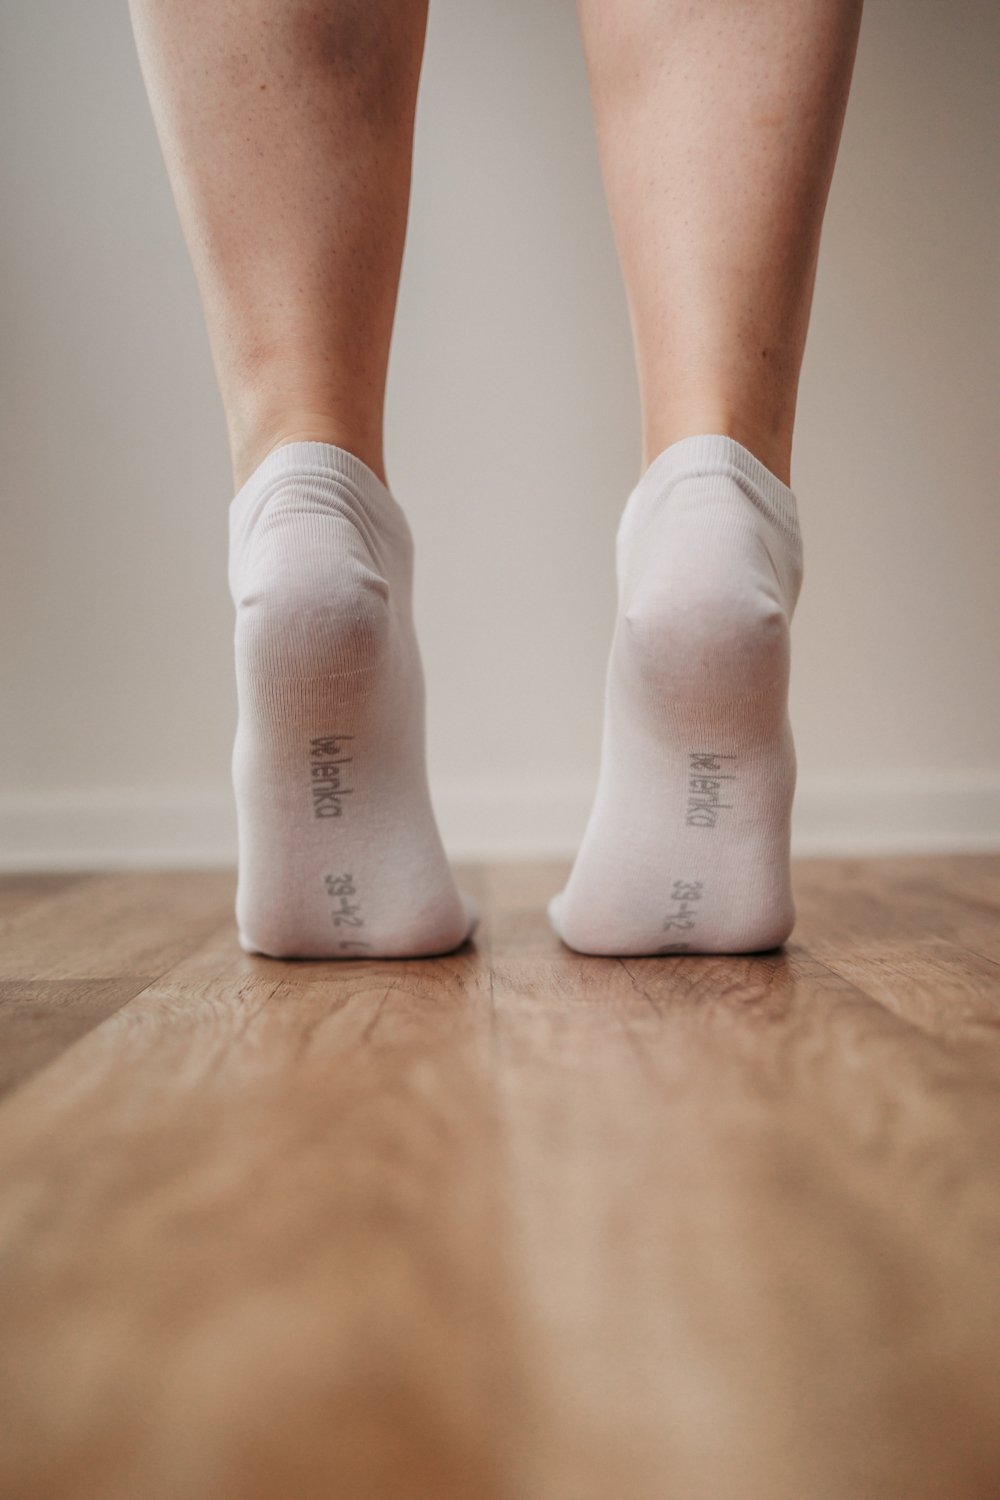 Barefoot Socks Be Lenka Crew - Merino Wool: Do your socks squeeze